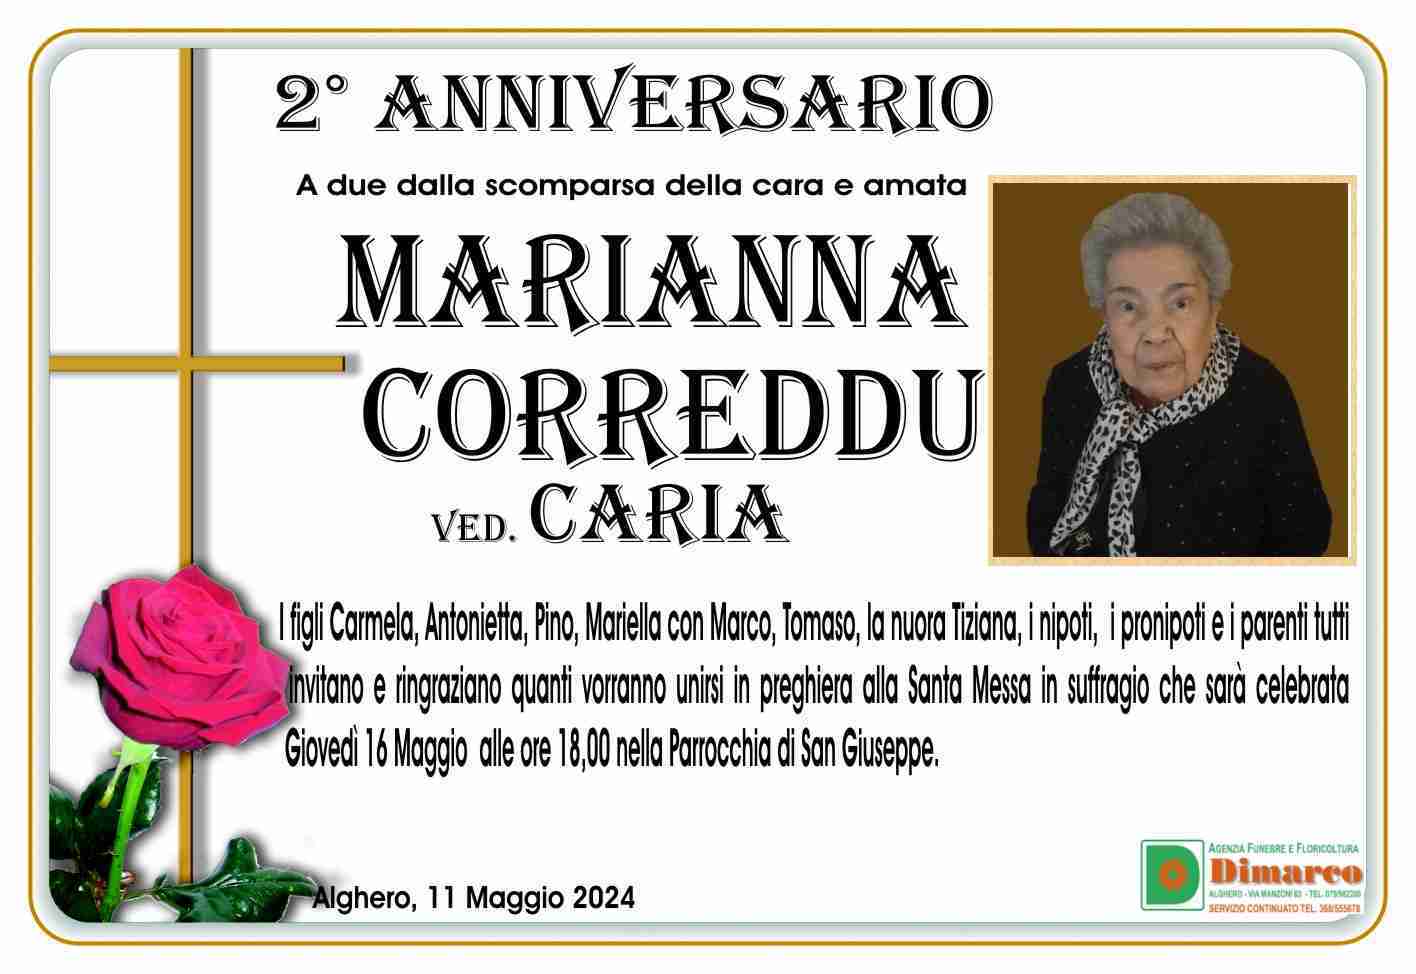 Marianna Correddu